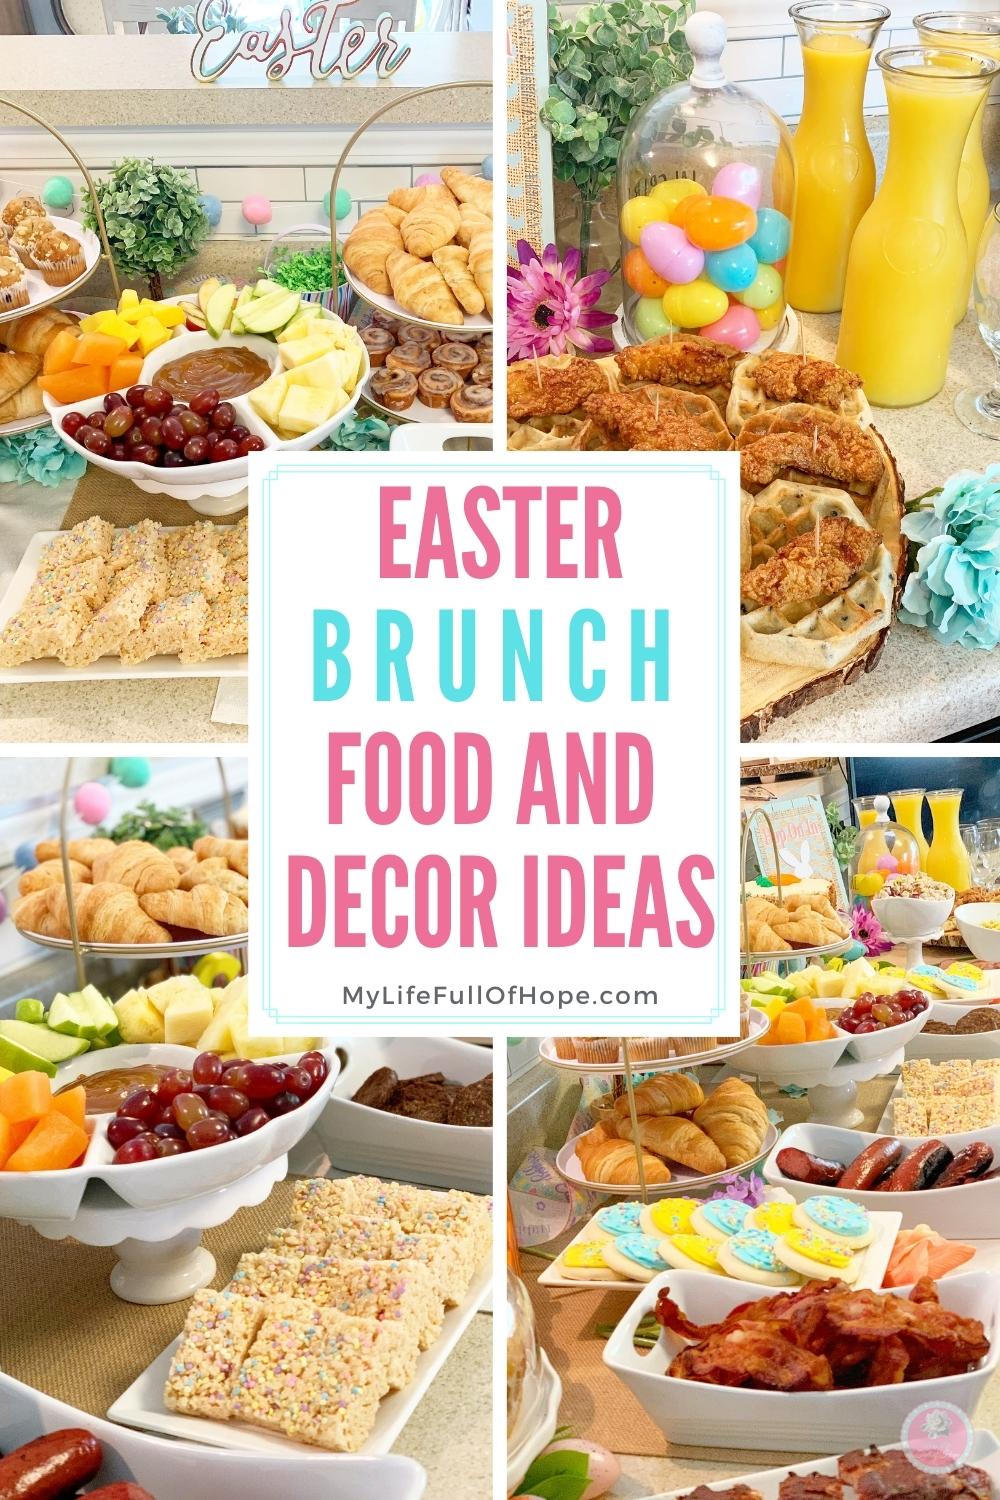 https://www.mylifefullofhope.com/wp-content/uploads/Easter-Brunch-Food-Decor-Ideas.jpg